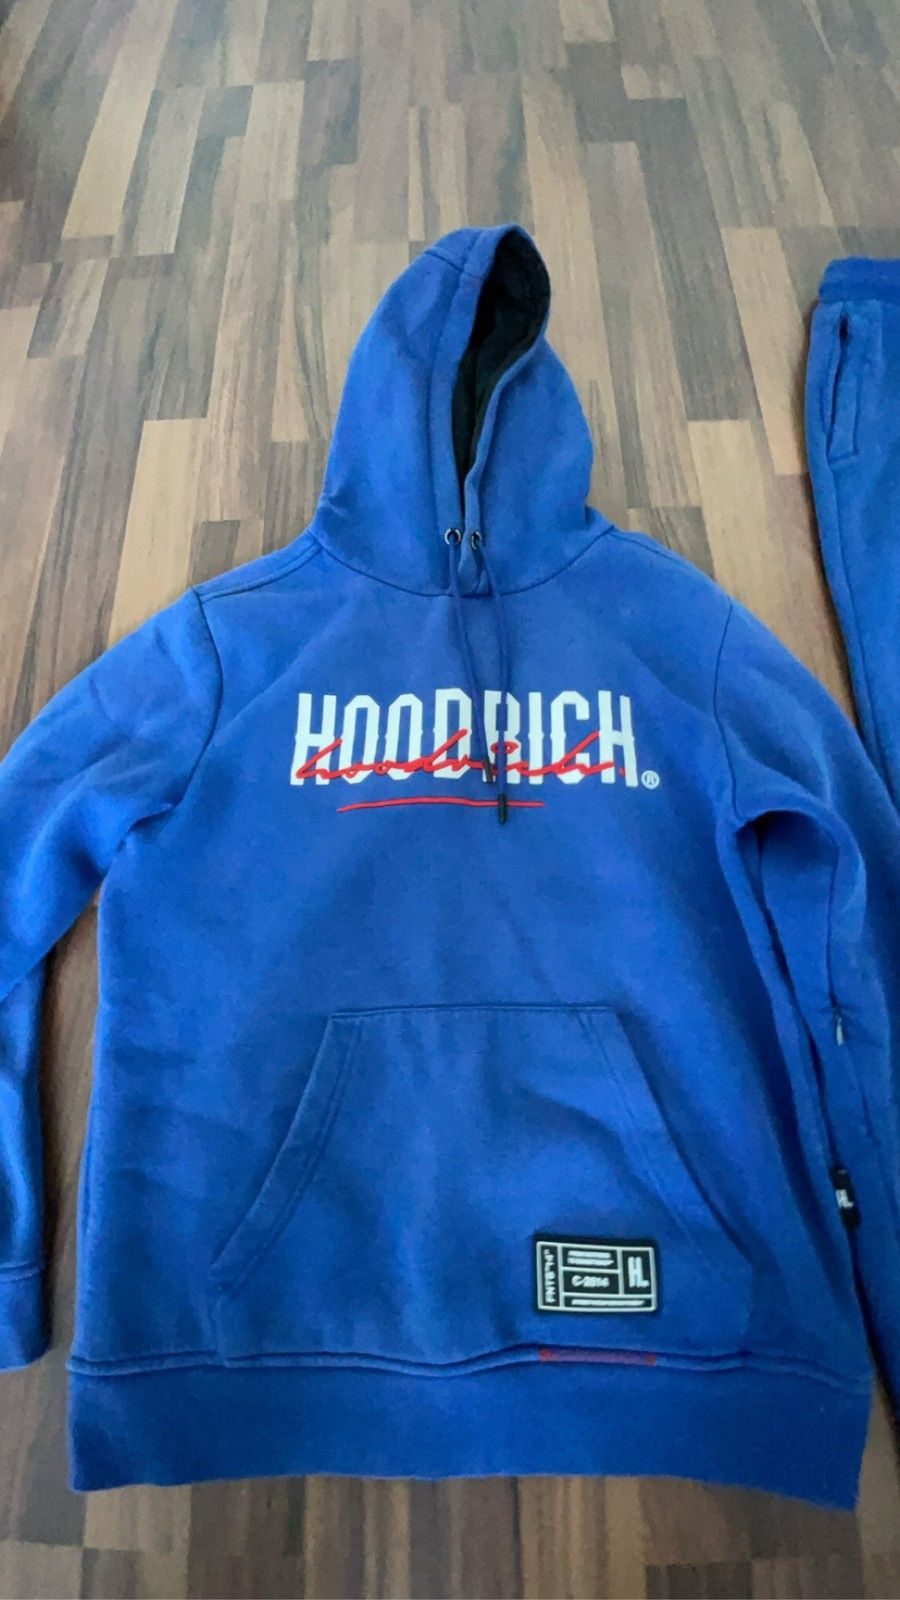 Hoodrich tracksuit